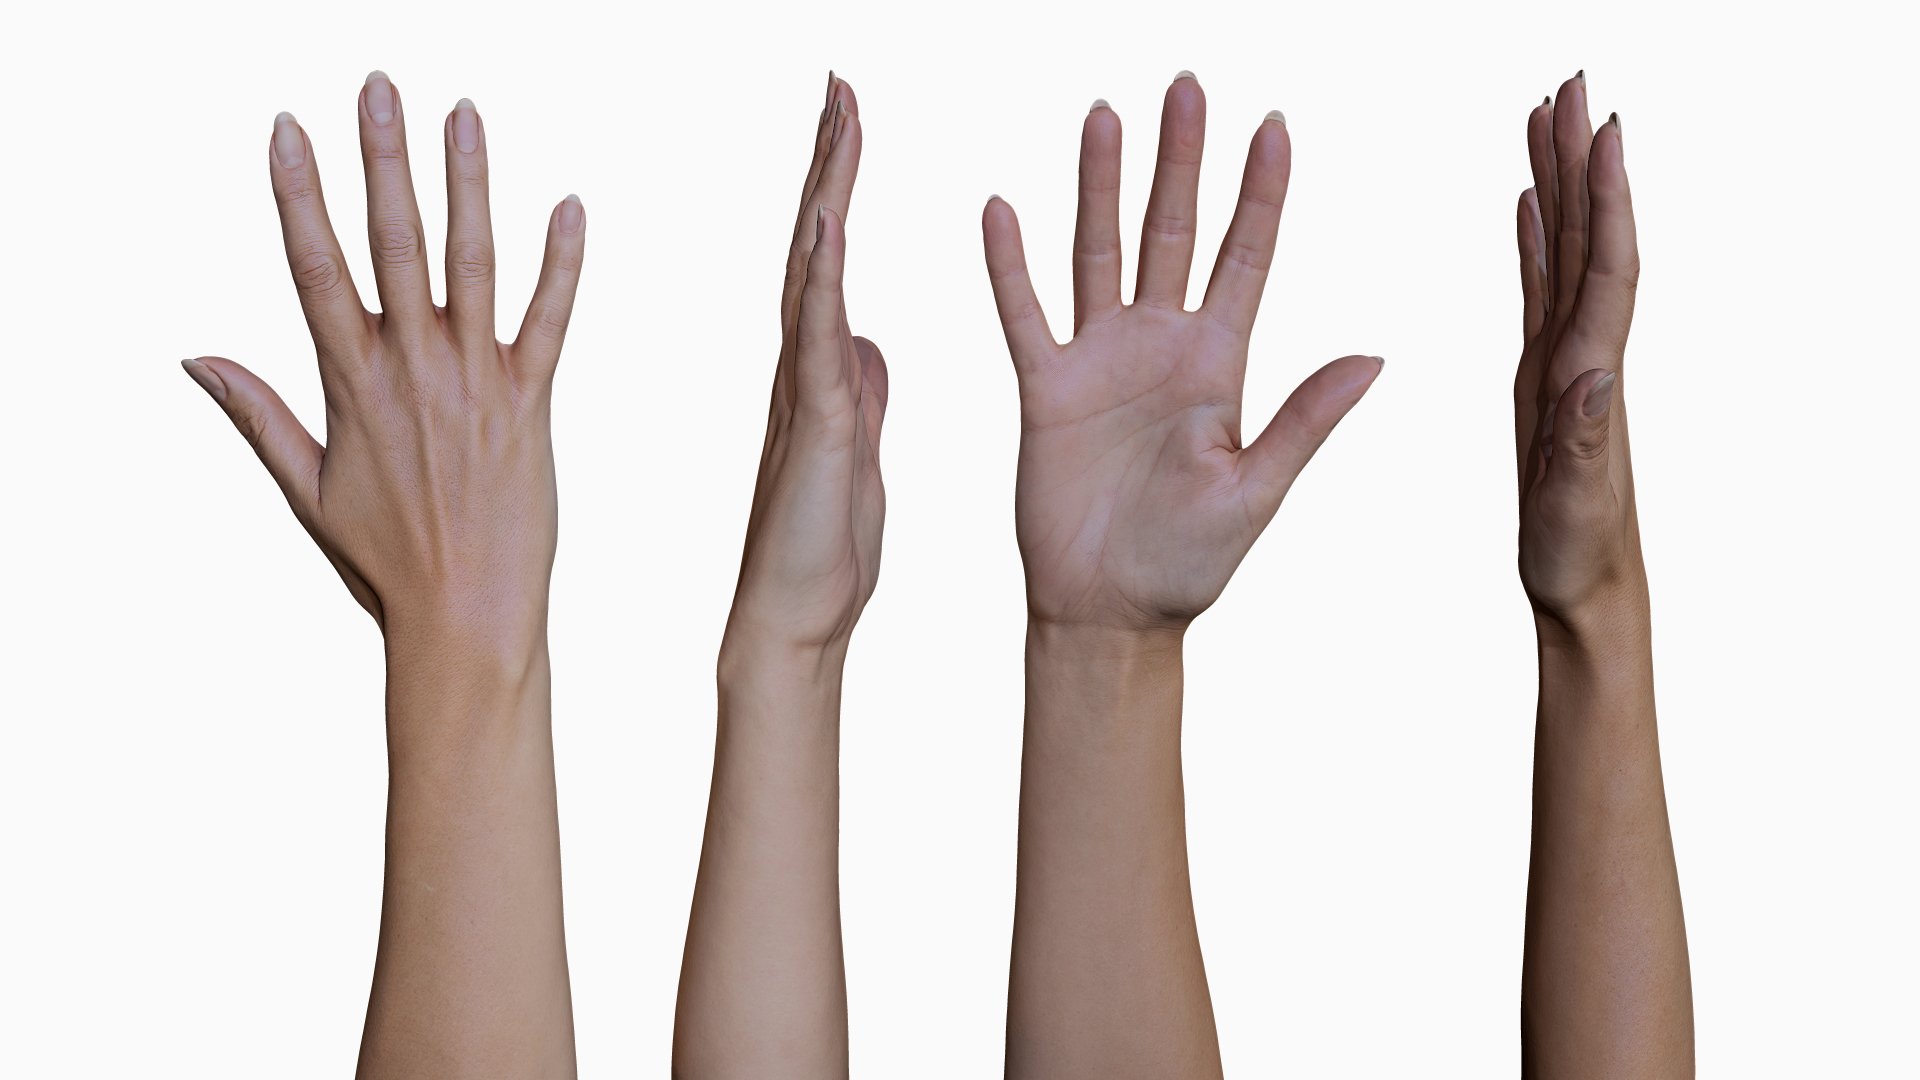 Female Hand